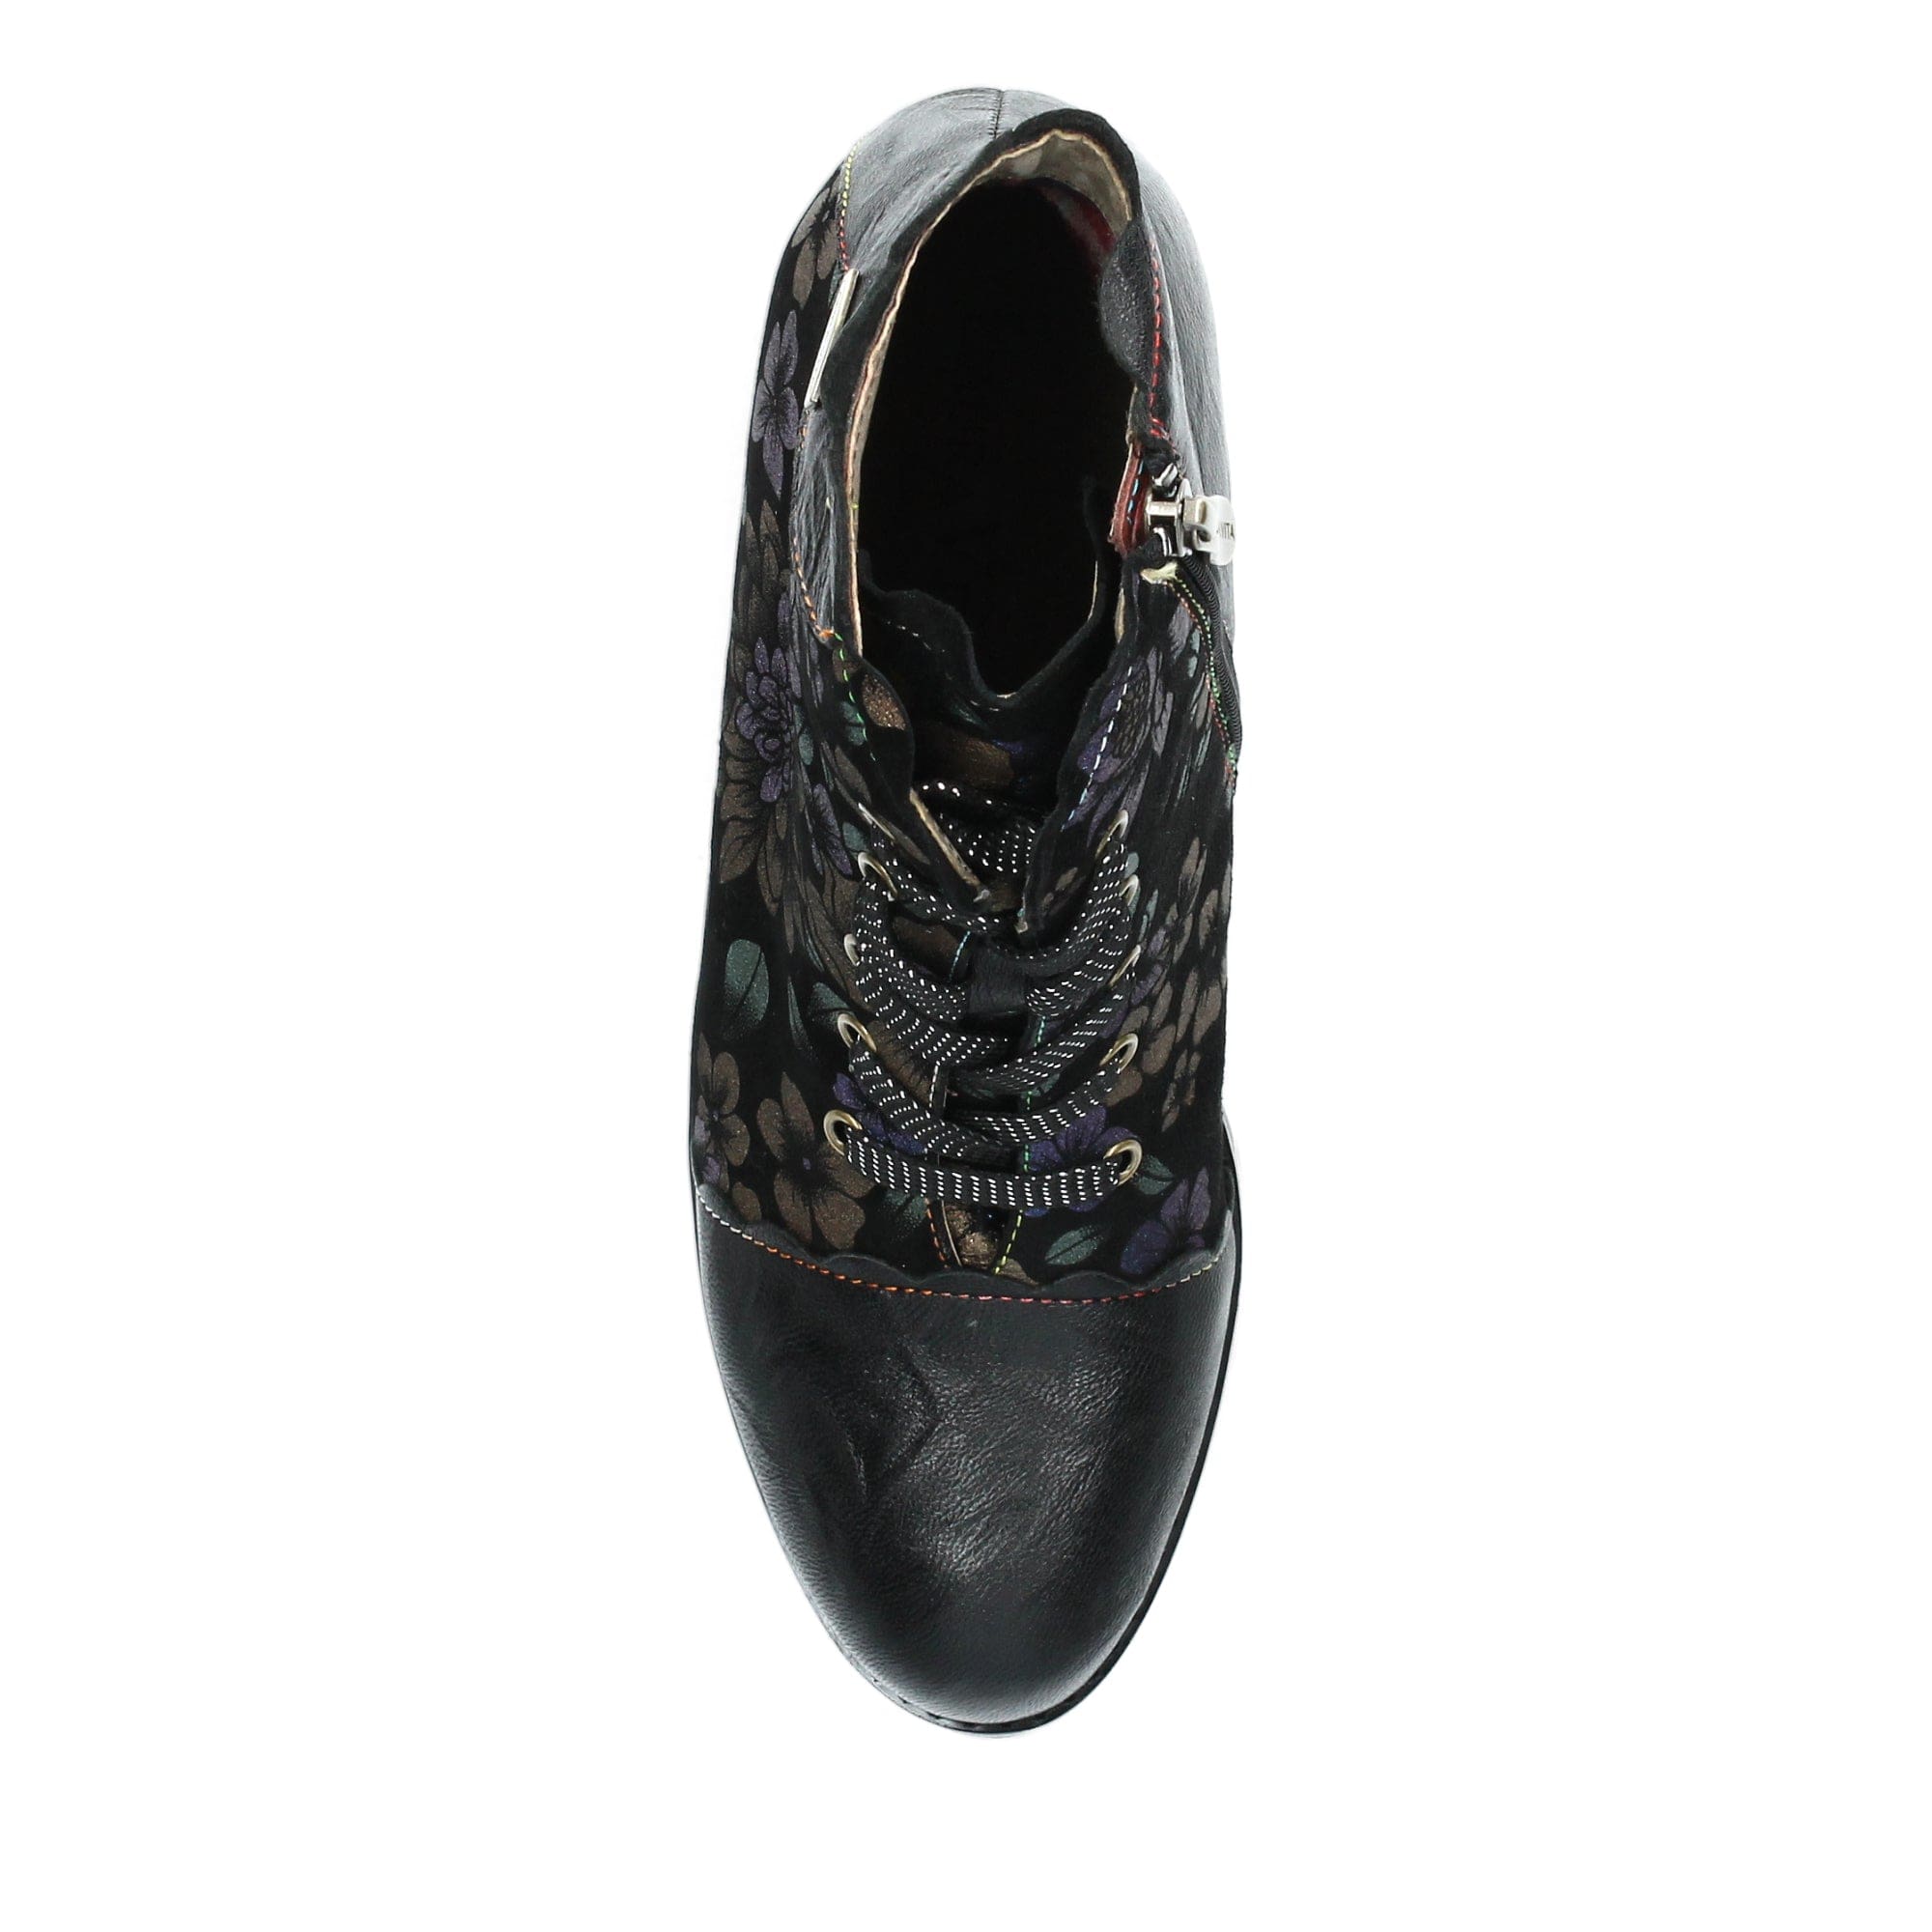 Chaussure GYCROO 11 - Boots